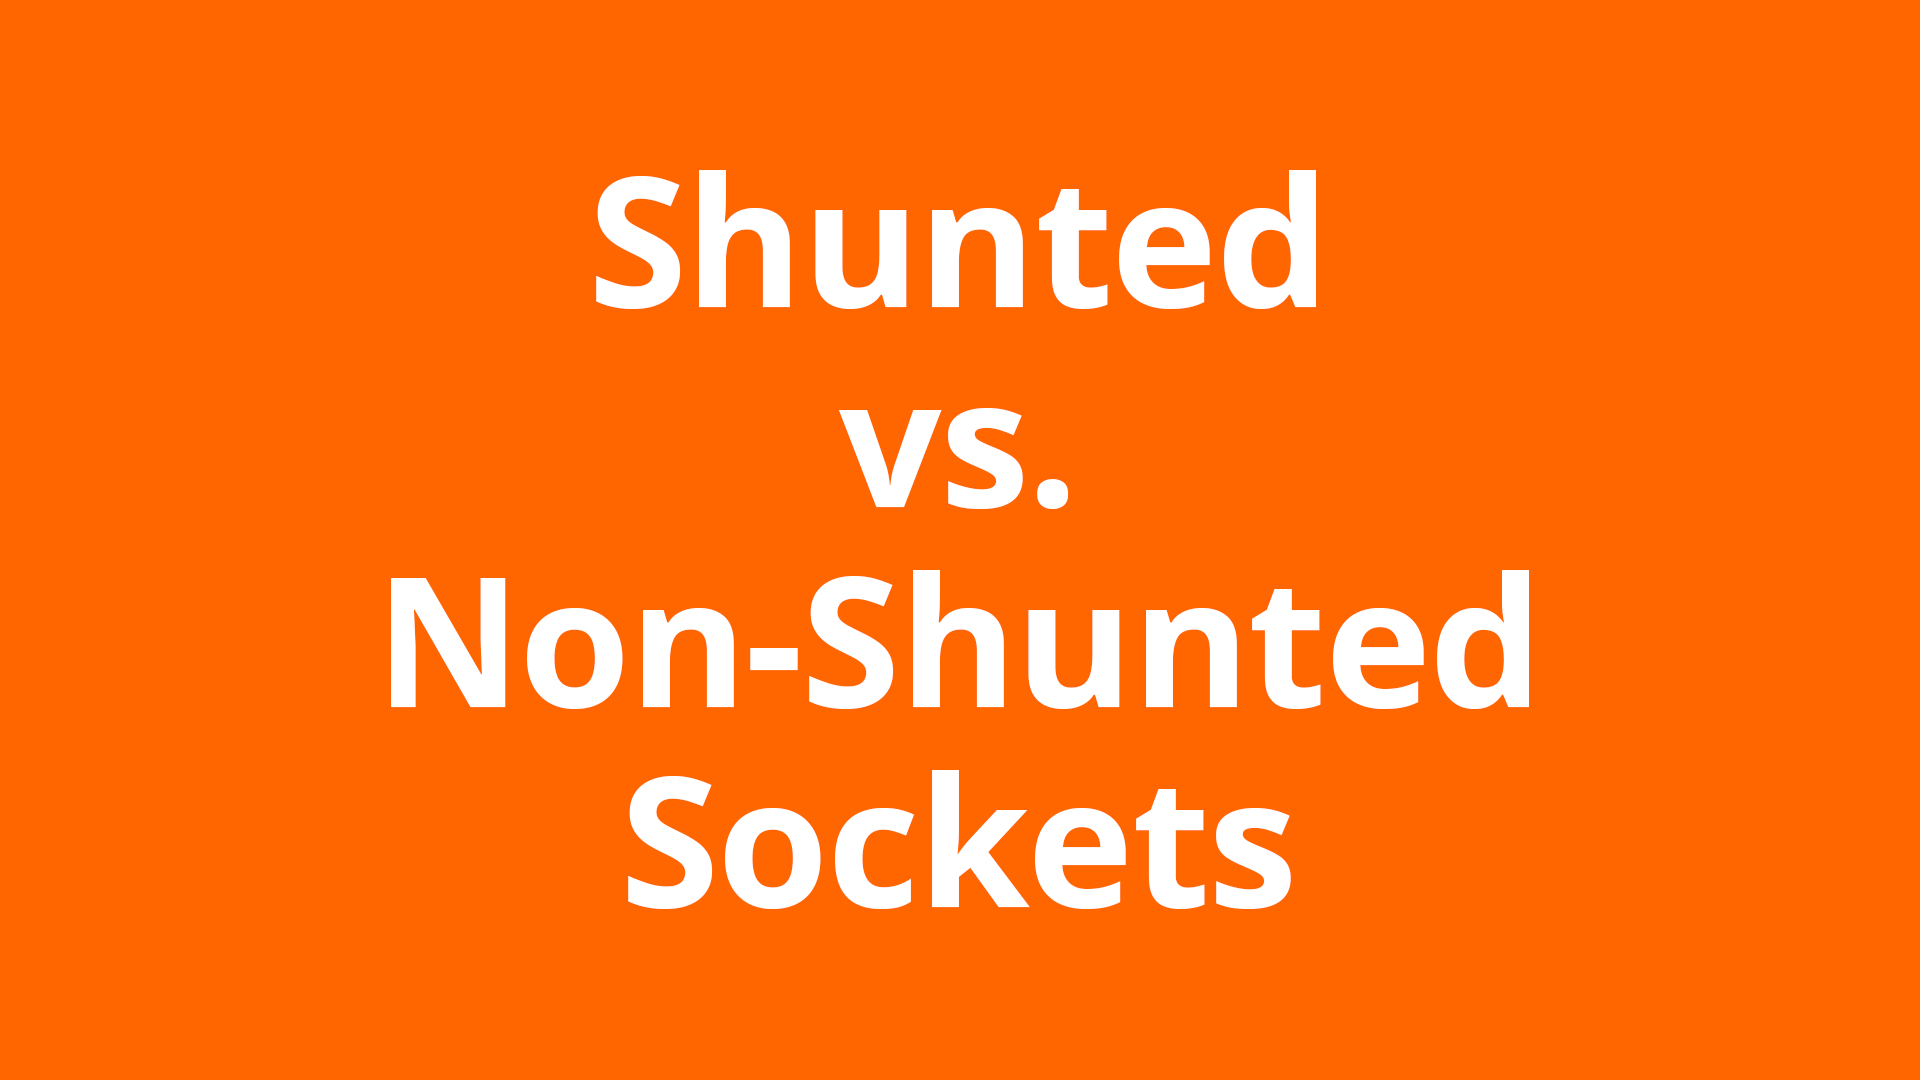 Shunted vs. Non-Shunted Sockets: What Option Do I Need?